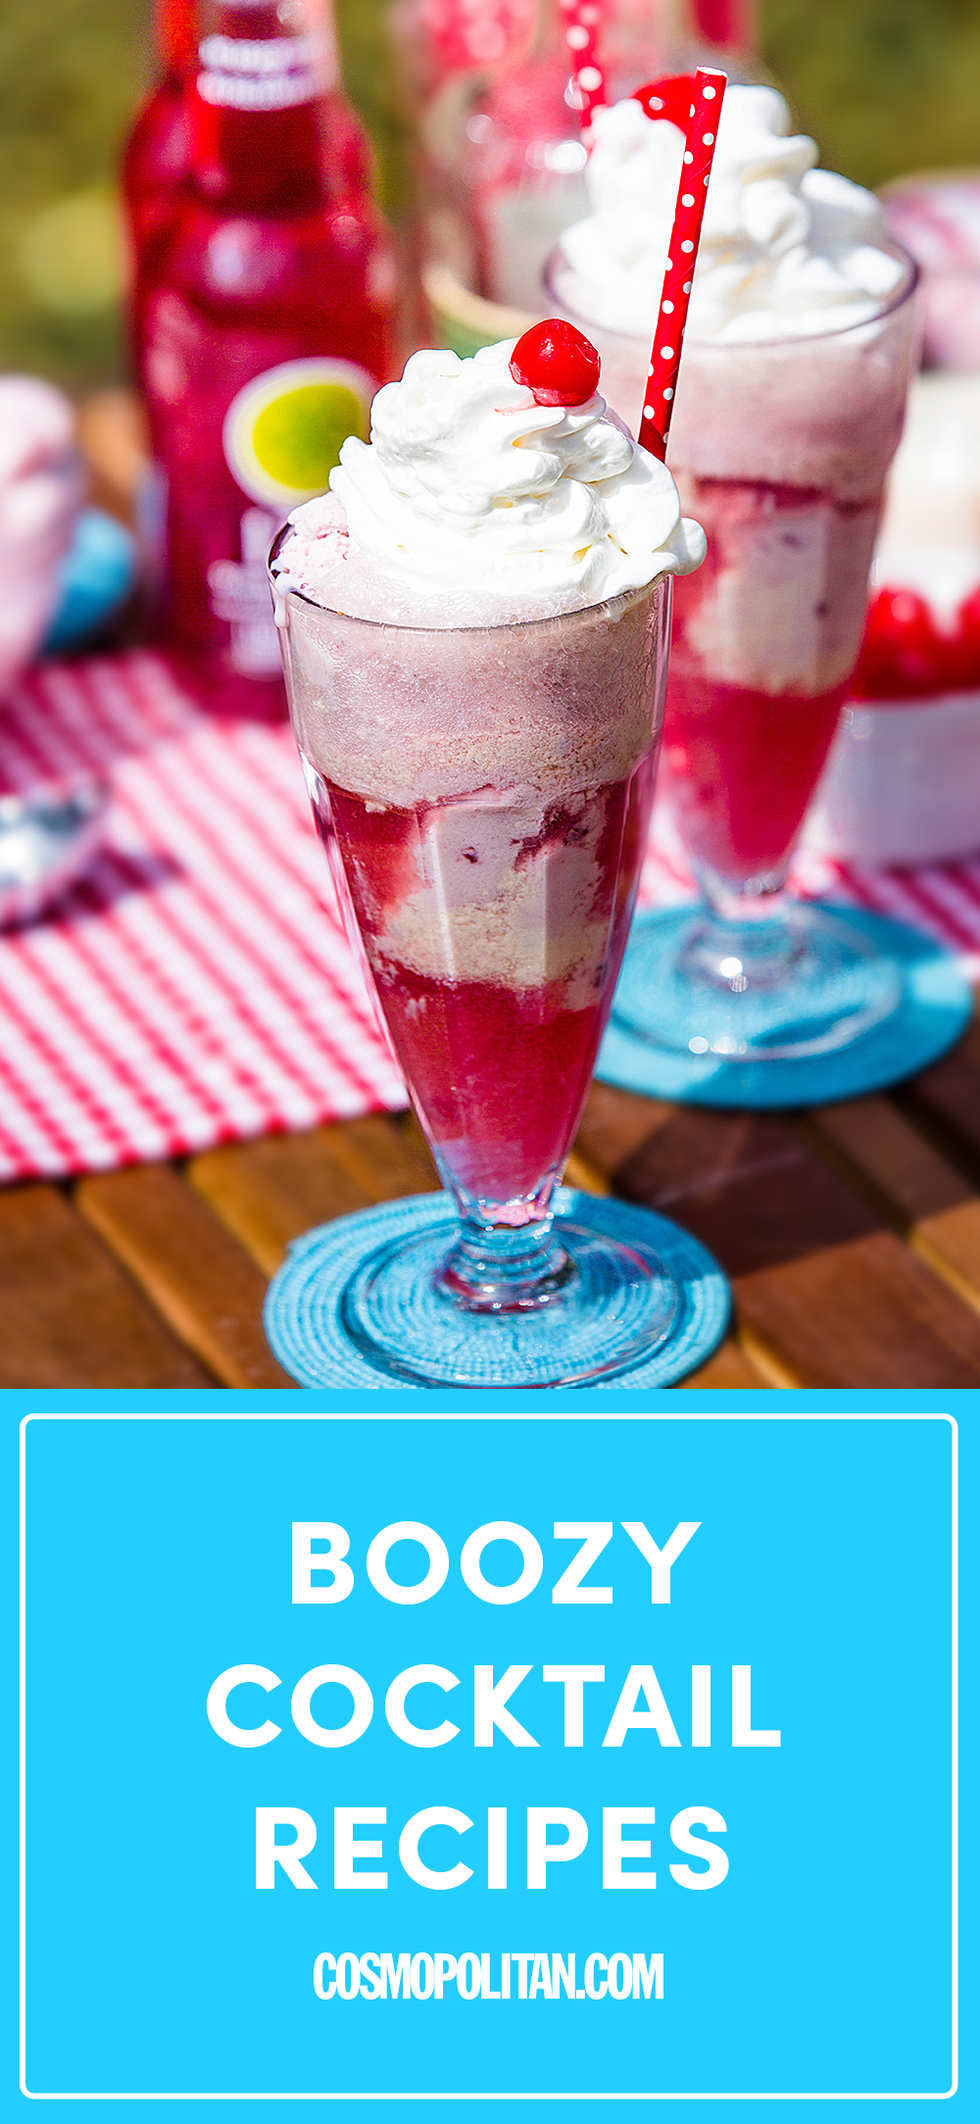 15 Boozy Ice Cream Drink Recipes - Best Ice Cream Cocktails